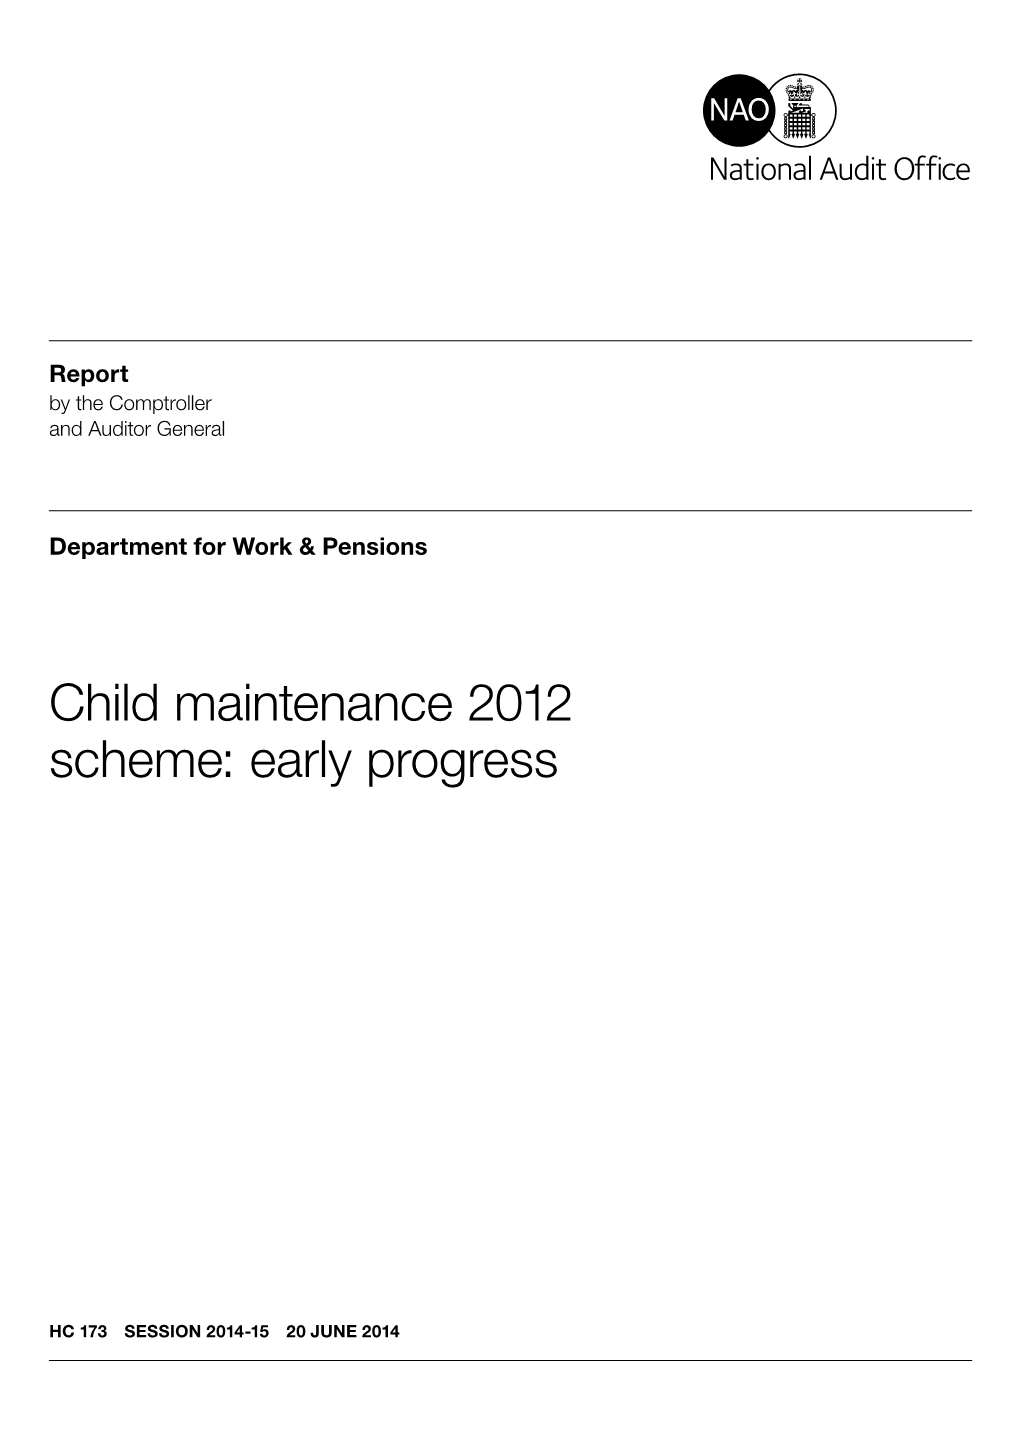 Child Maintenance 2012 Scheme Early Progress